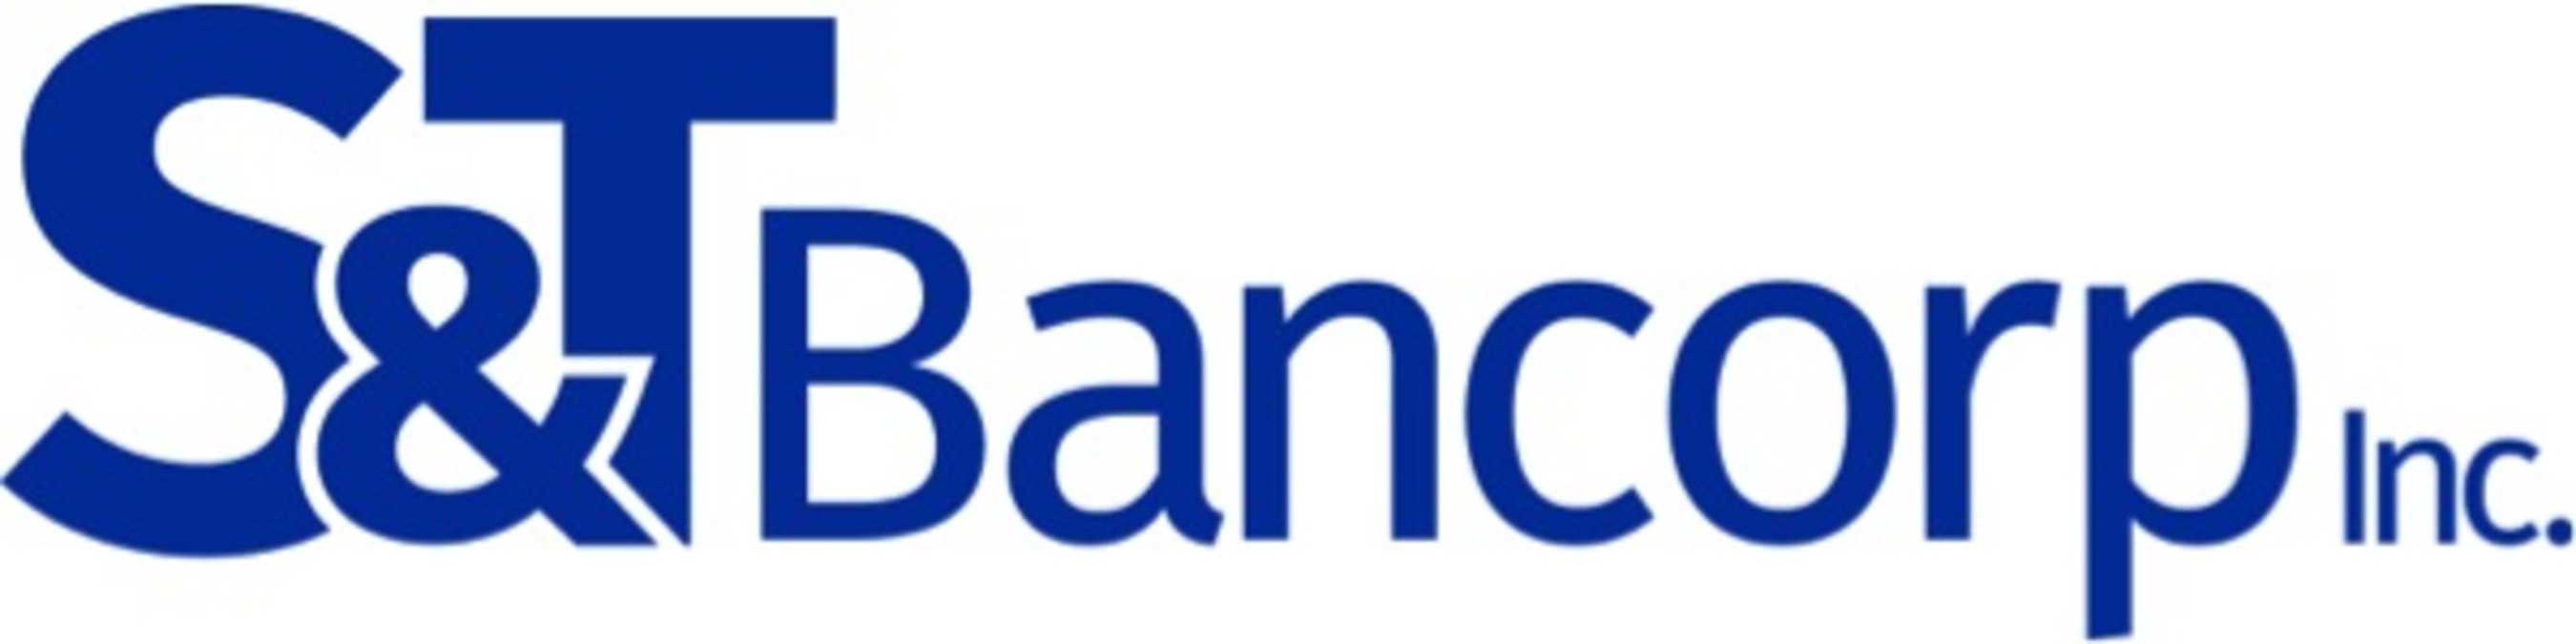 S&T Bancorp, Inc. Logo.